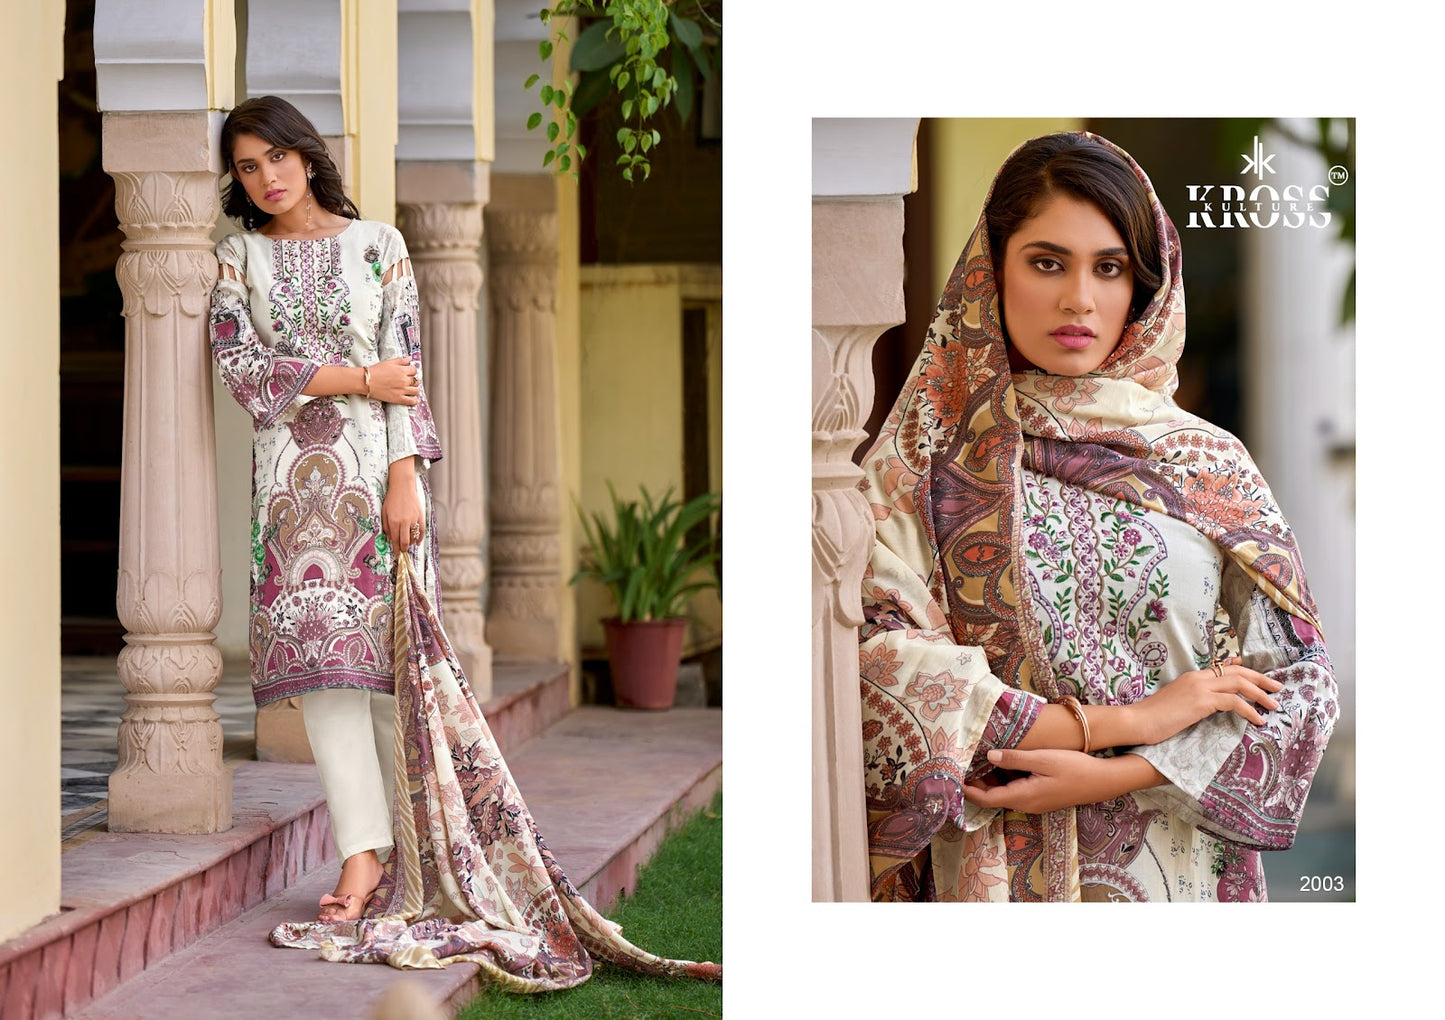 Naira Vol 2 Kross Kulture Heavy Cotton Karachi Salwar Suits Wholesaler Ahmedabad